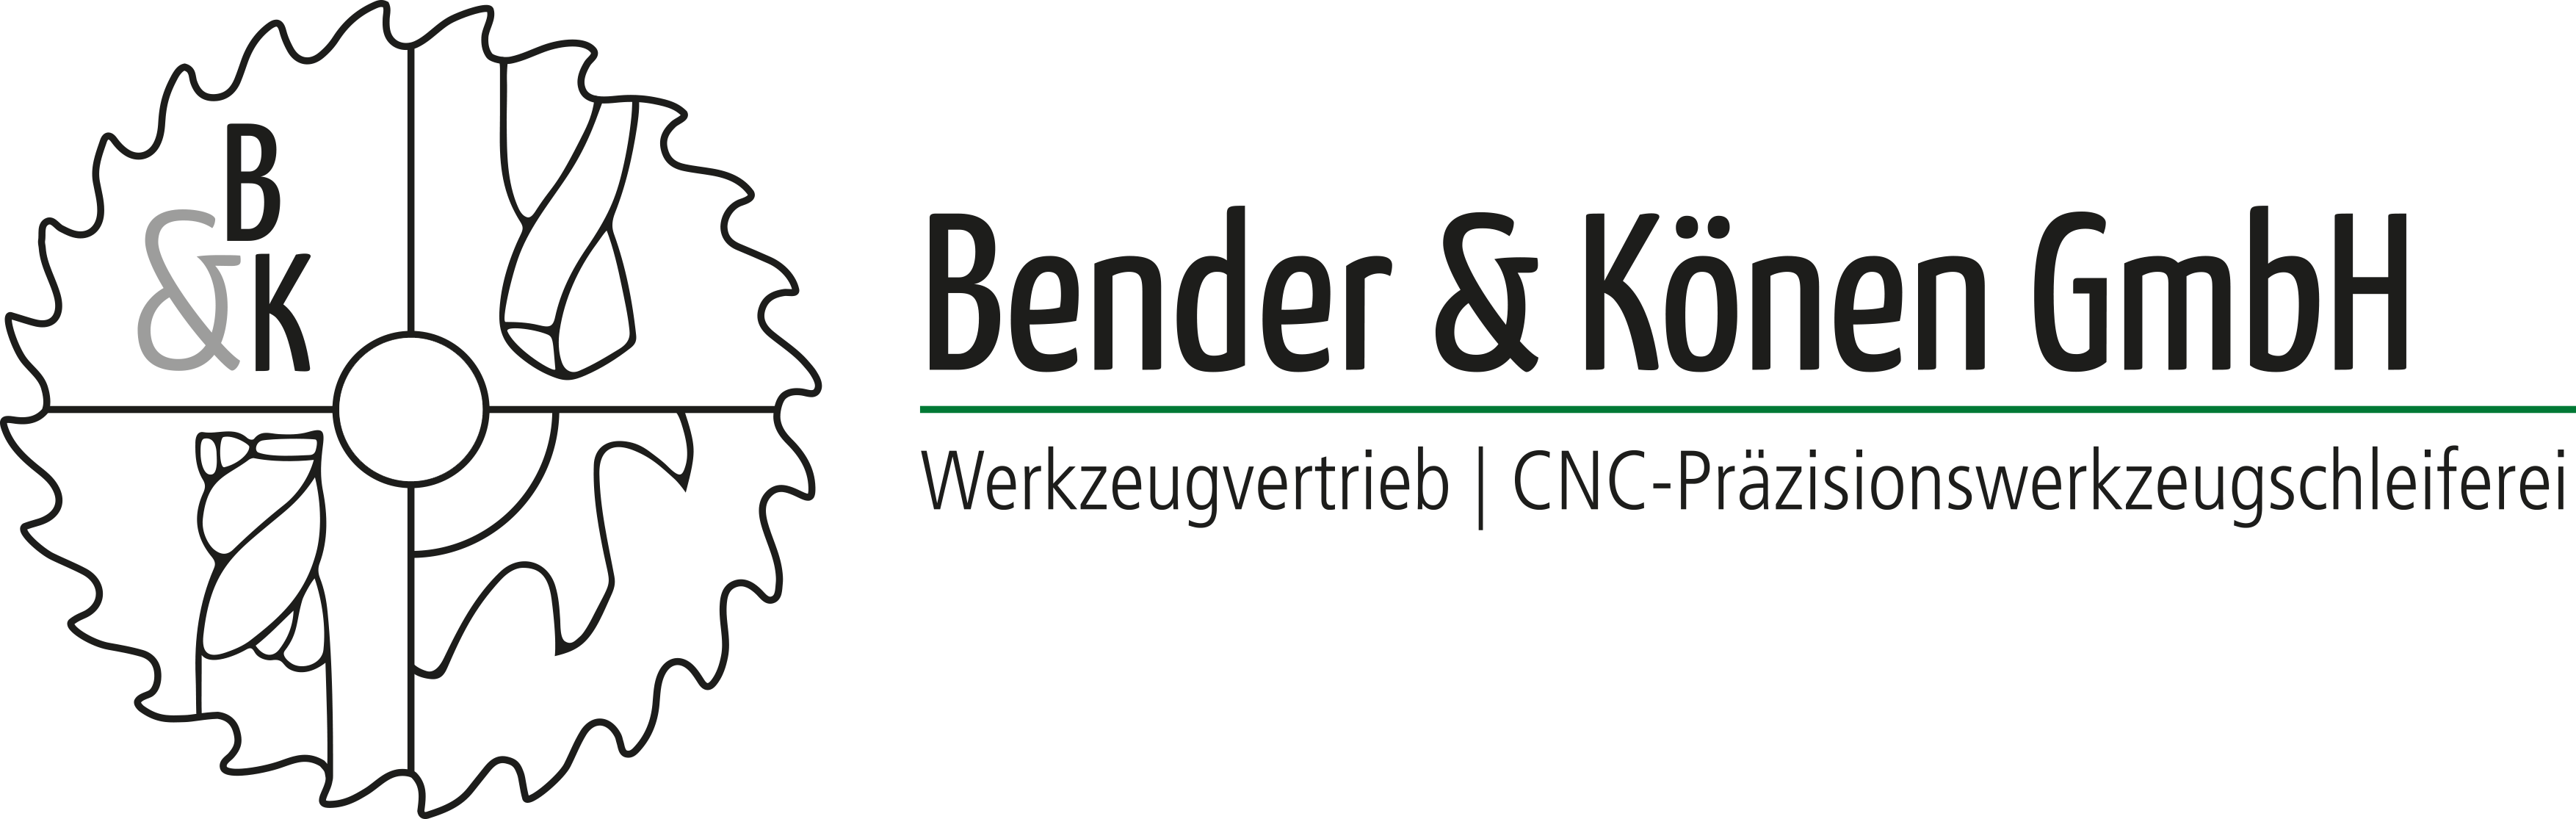 Bender & Könen GmbH